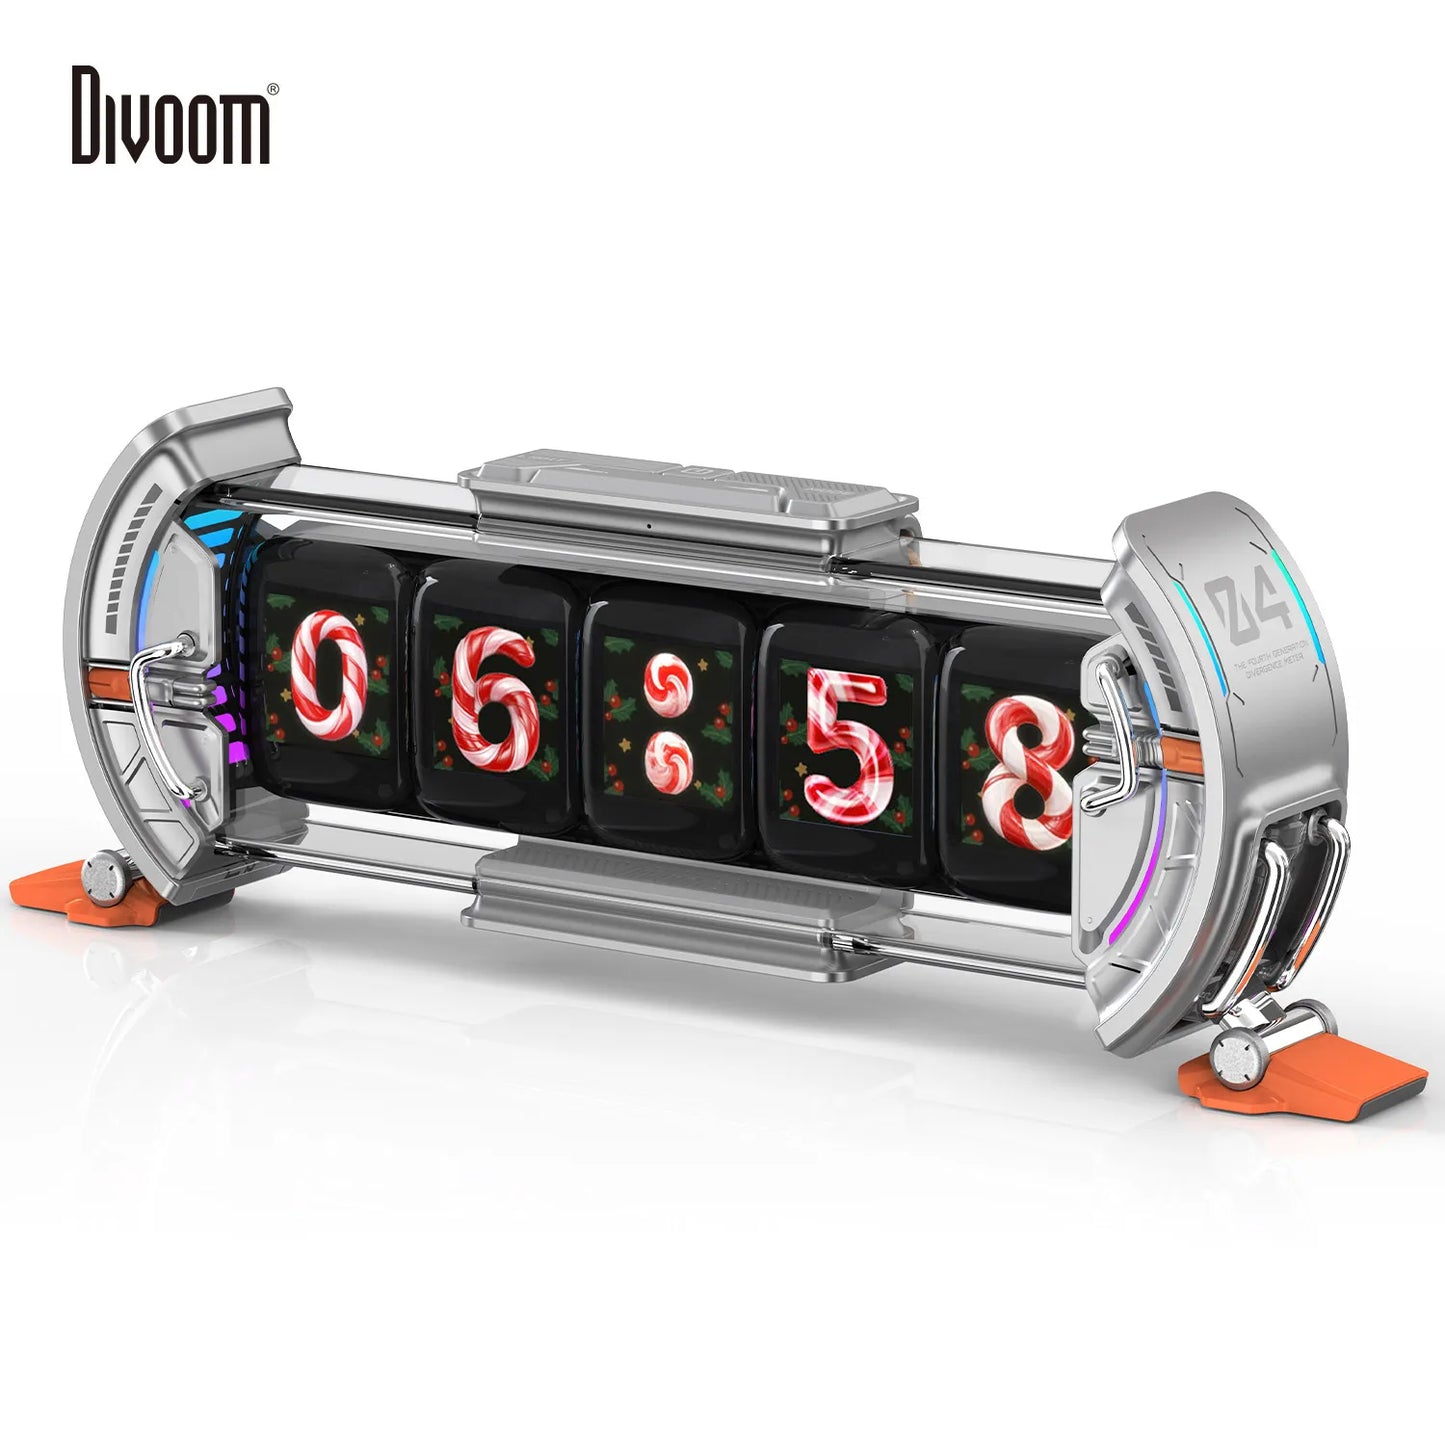 New Divoom Times Gate Pixel Art Gaming Setup Clock with Smart App Control, 128x128 IPS Screen Display - A1Smartstore®